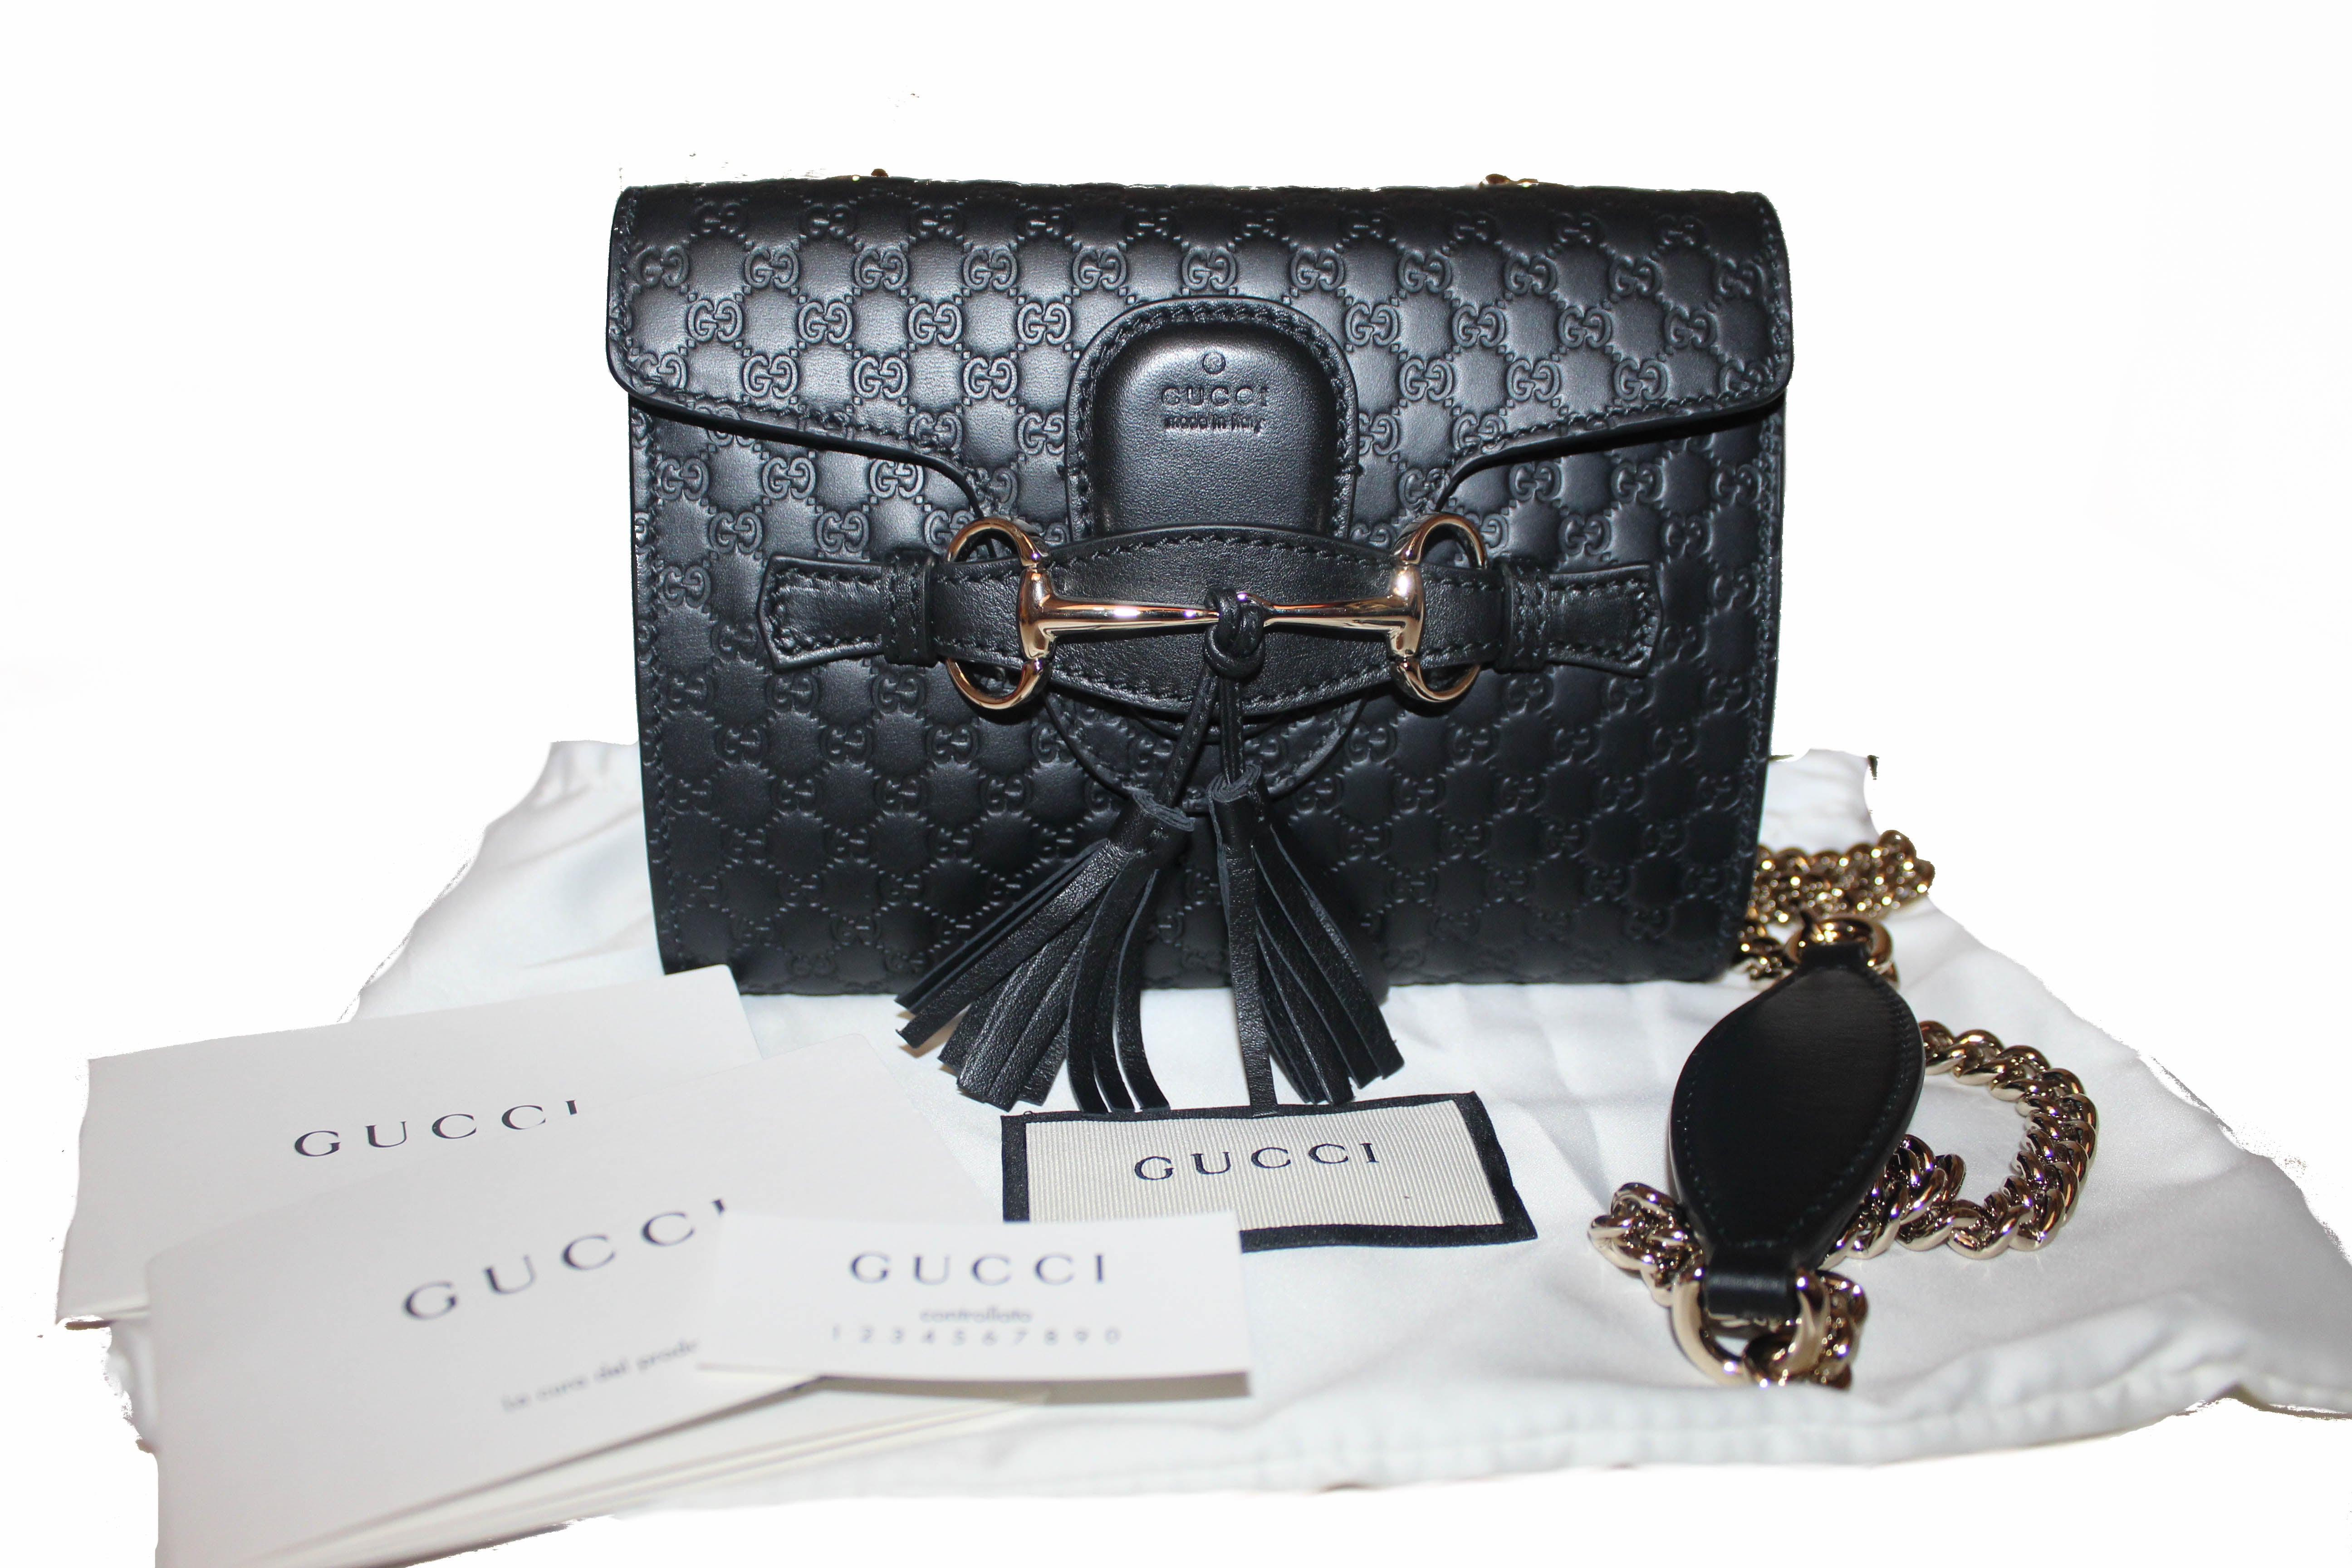 Gucci Microguccissima Small Leather Crossbody Bag